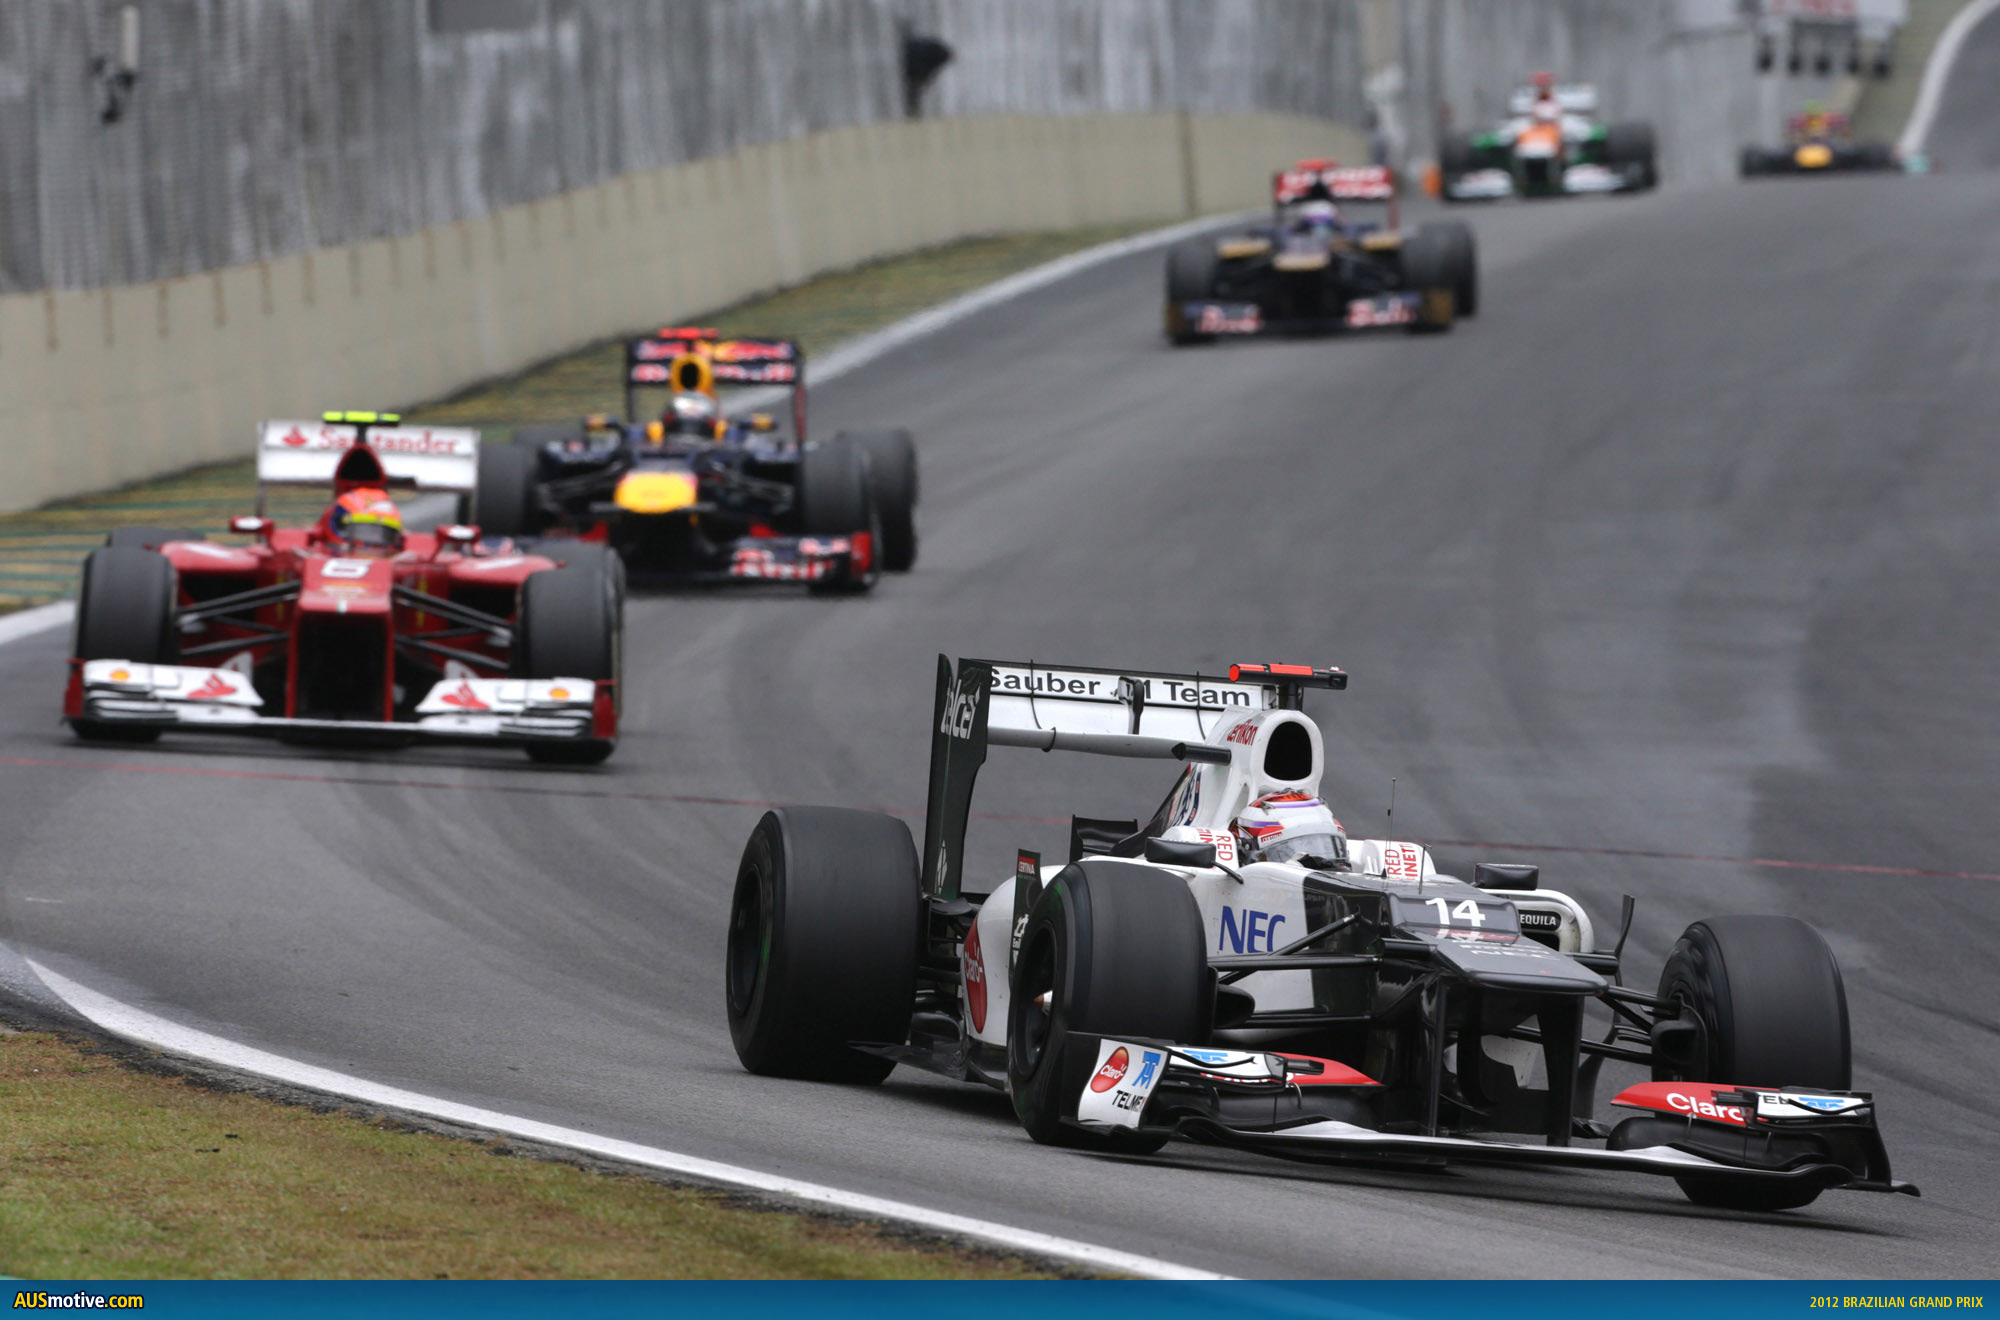 2012 Brazilian Grand Prix in pictures – AUSmotive.com